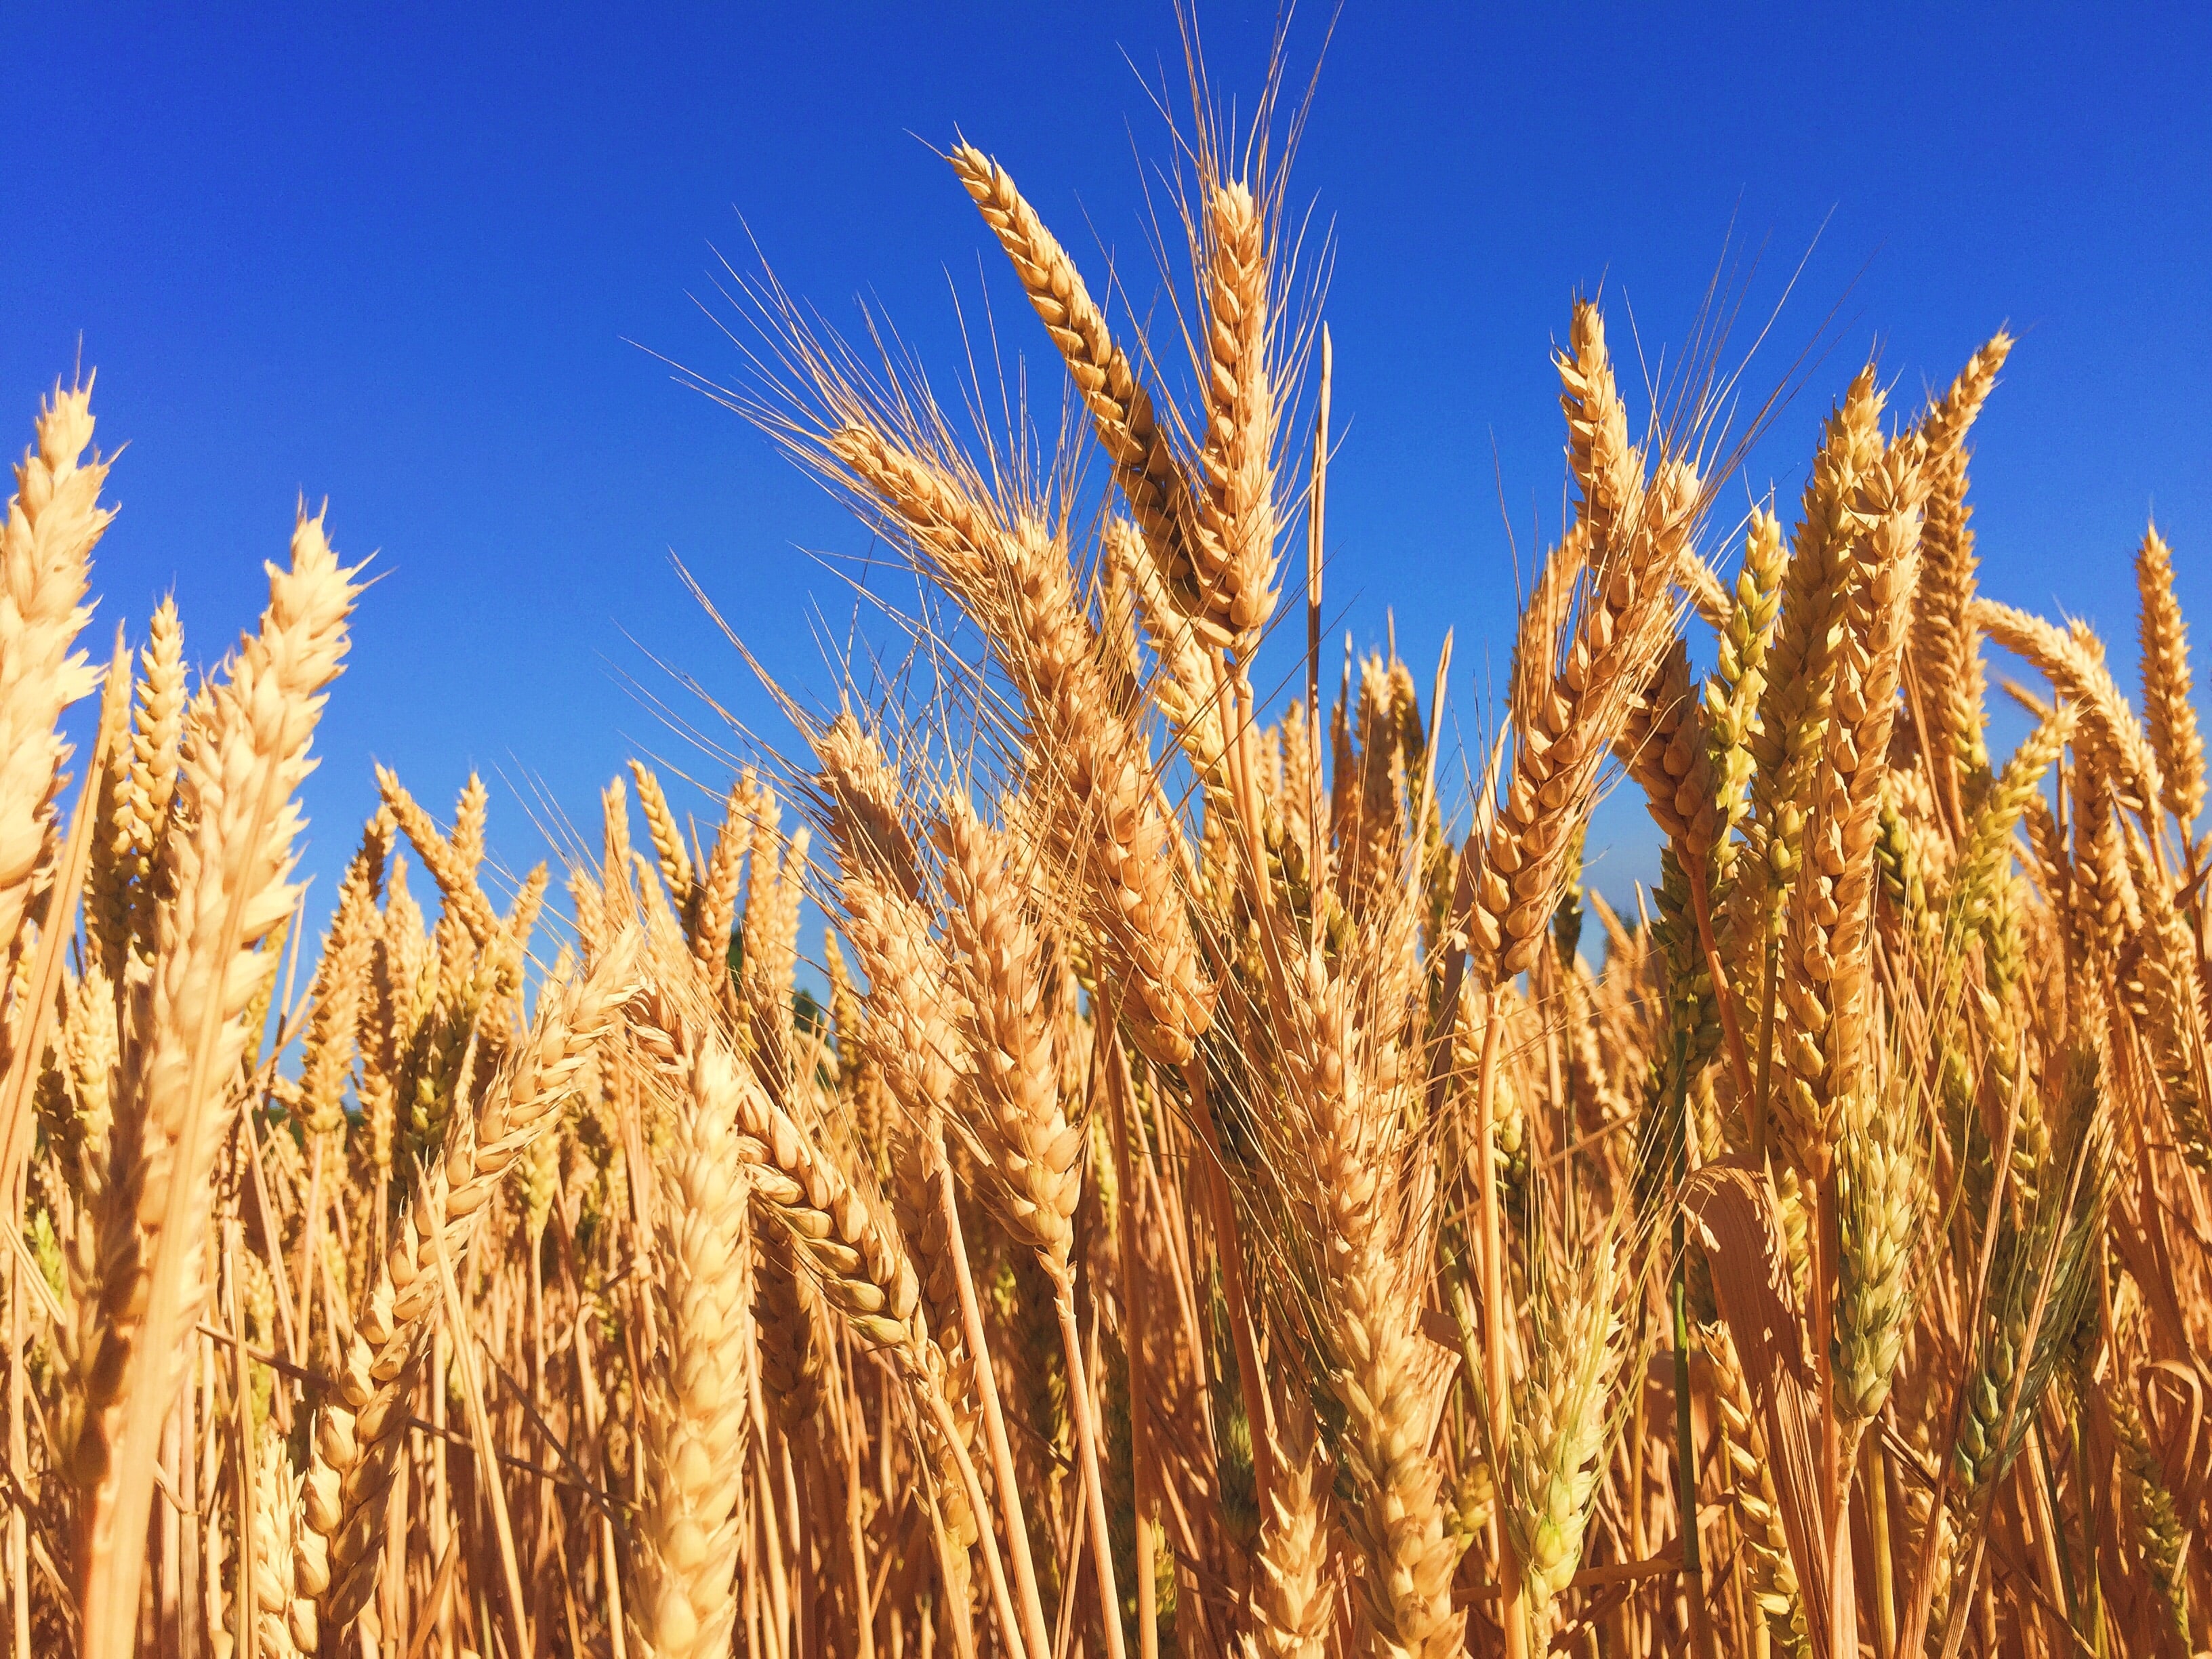 Carlsberg ramps up regenerative farming practices across barley supply chain